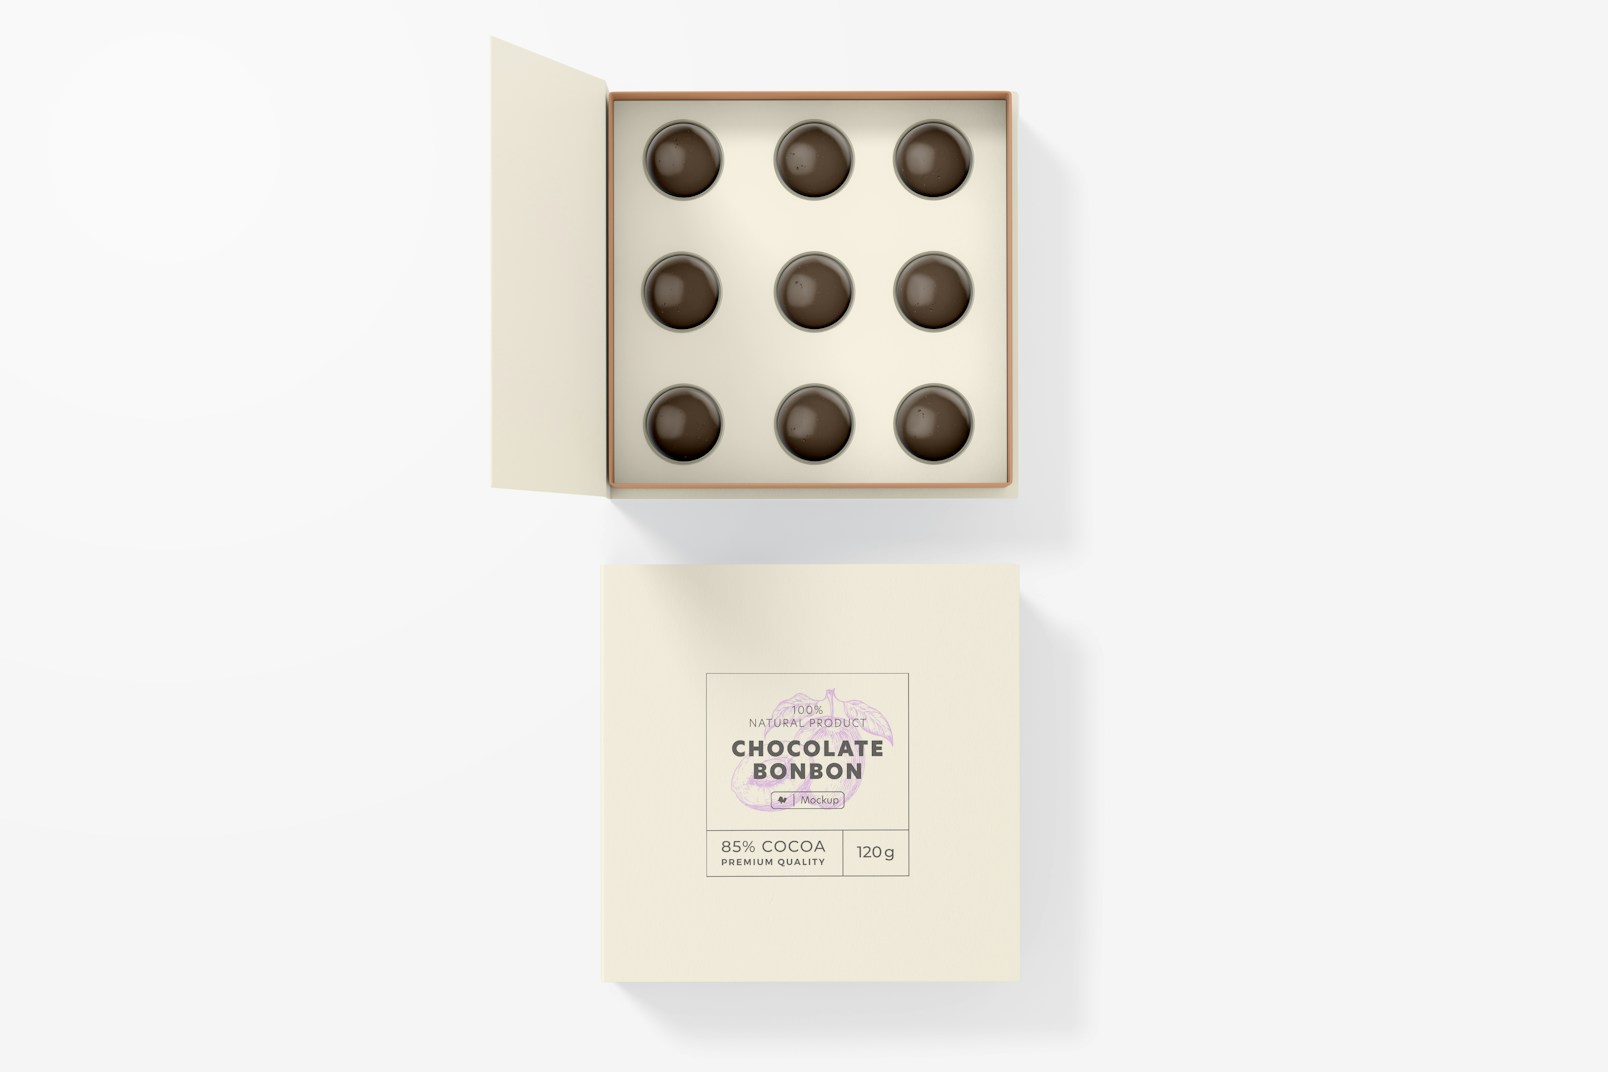 Chocolate Bonbon Luxury Box Mockup, Top View